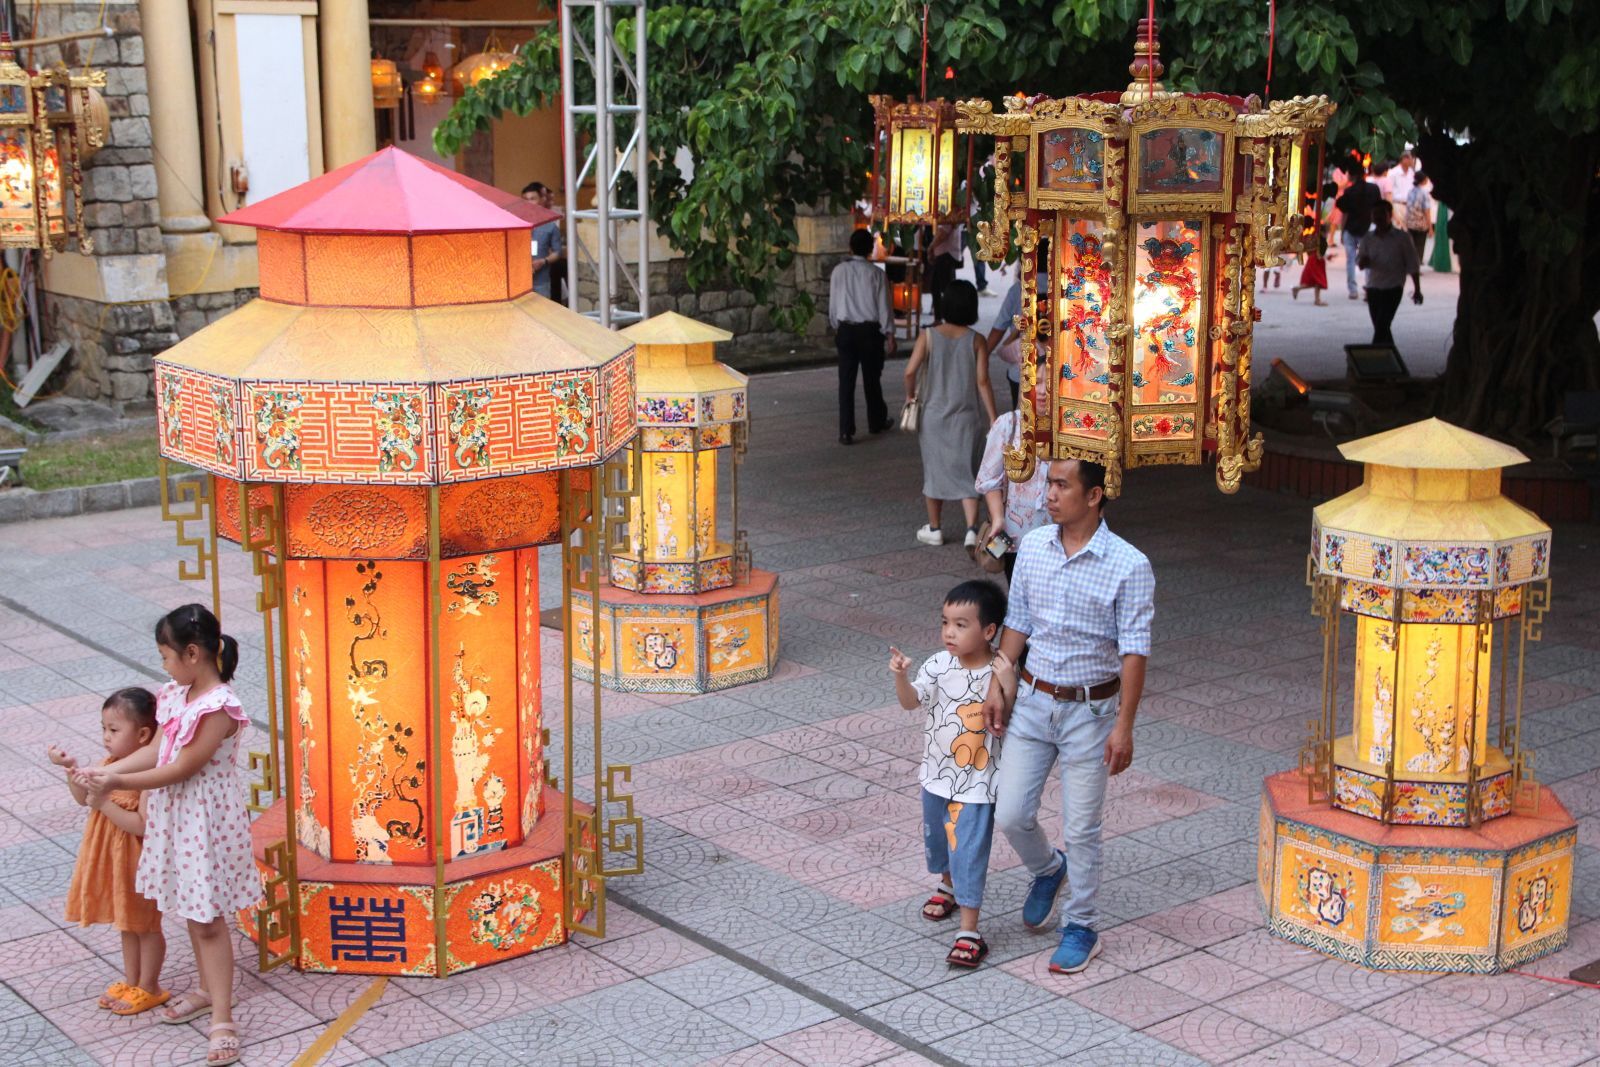 Large royal lanterns being displayed outside the courtyard